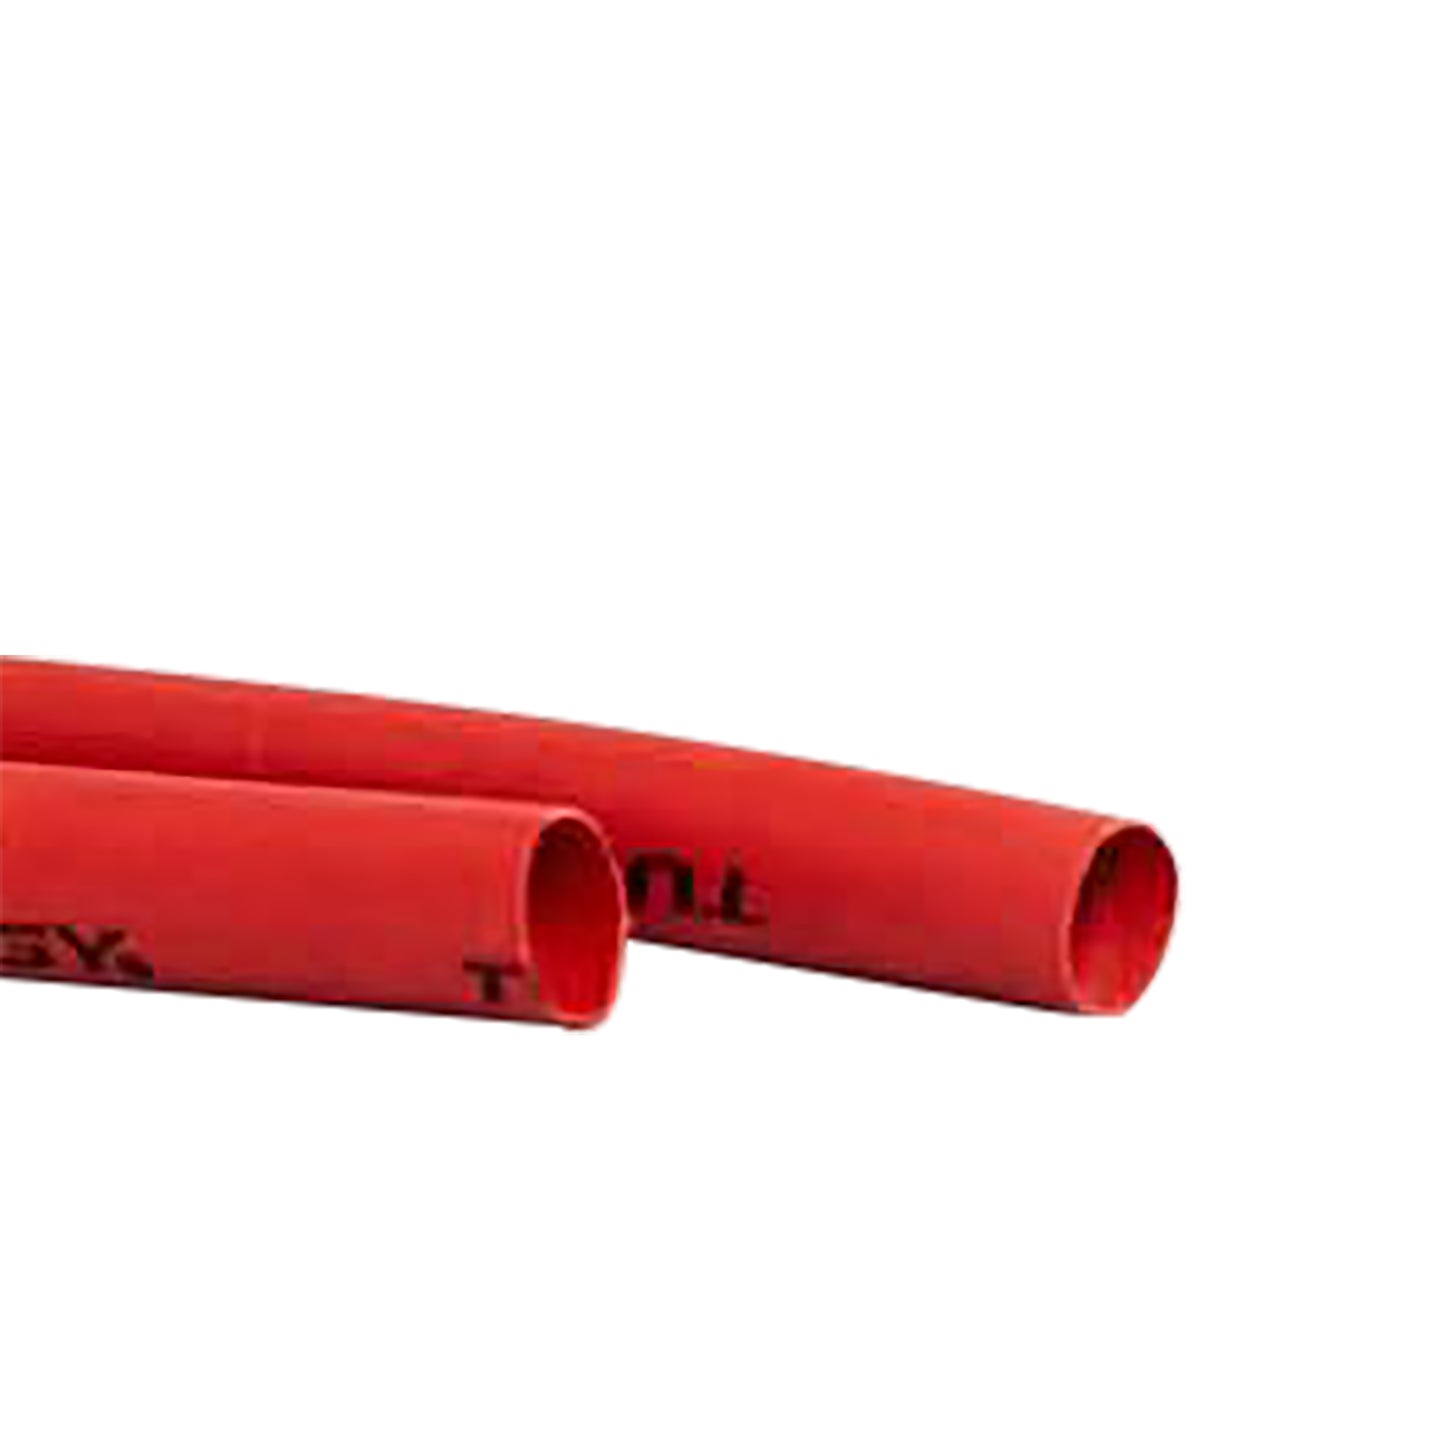 Flexible Thin Single Wall Non-Adhesive Heat Shrink Tubing 2:1 Red 3/4" ID - 50' Ft Spool